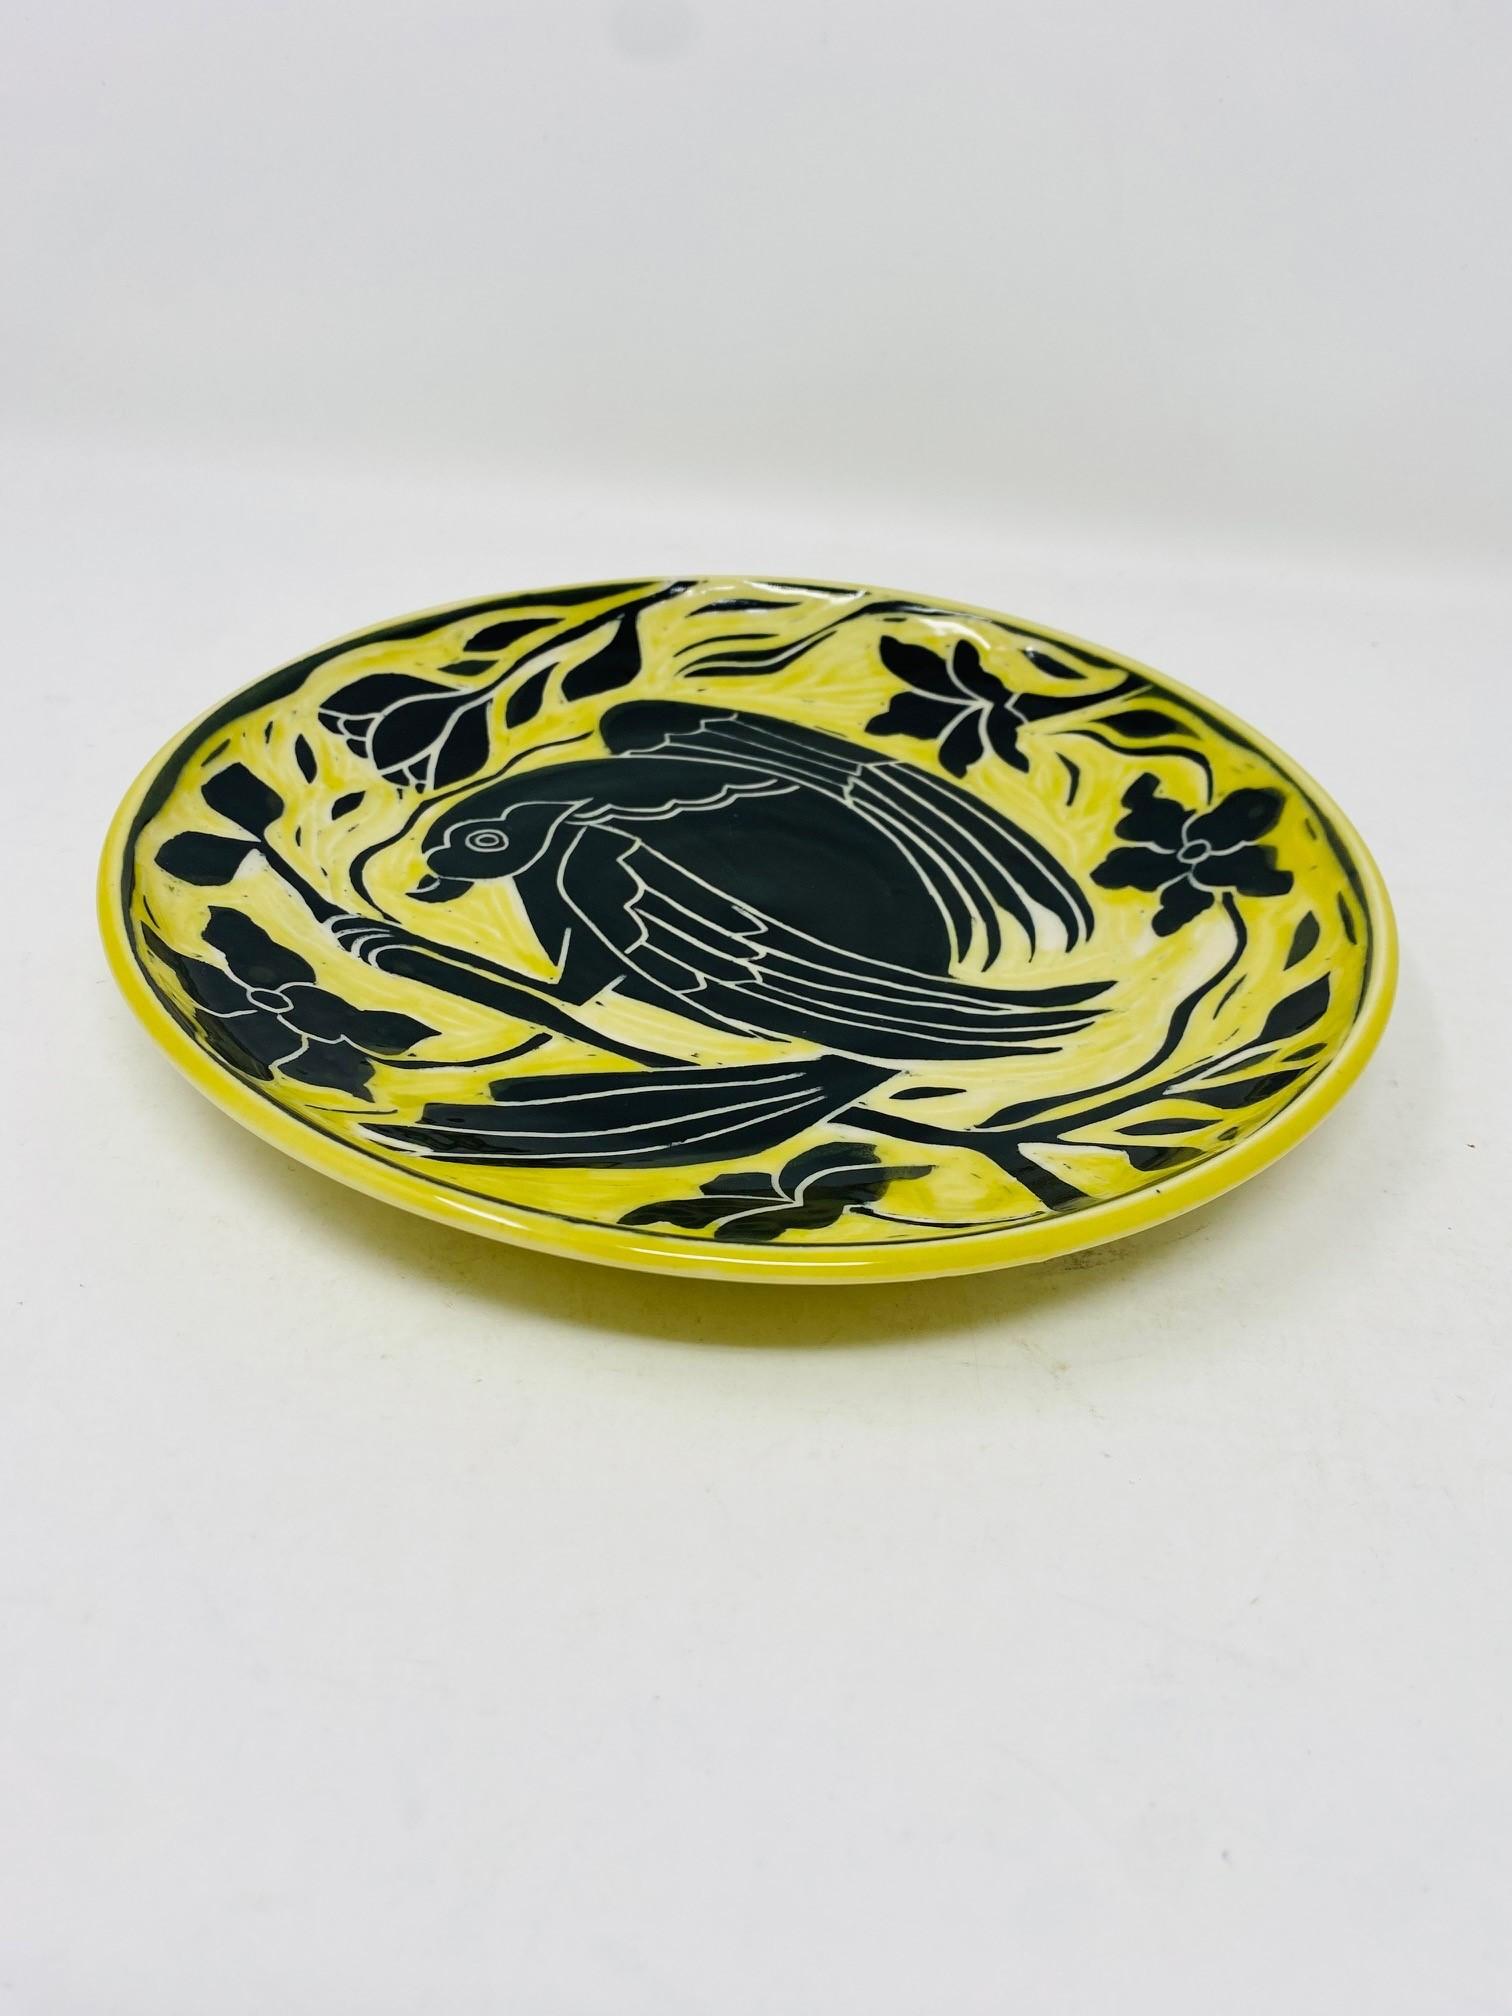 American Vintage Ceramic Decorative Dish with Bird Figure by Wert Ceramics For Sale